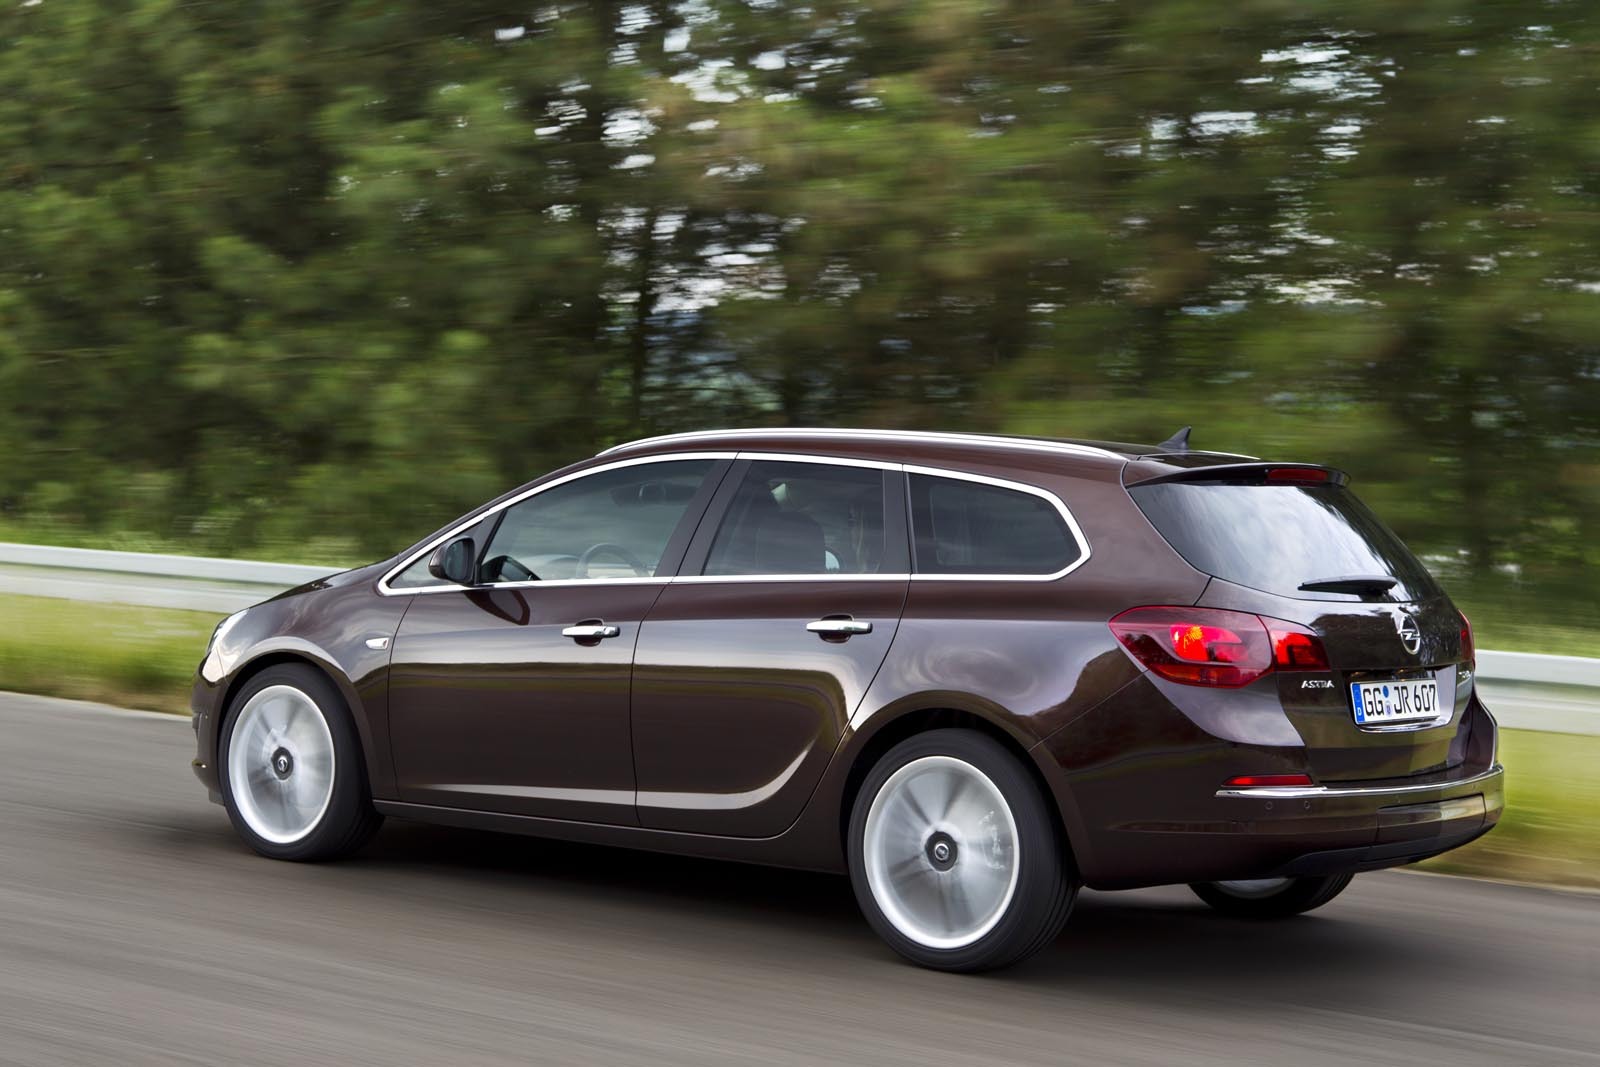 Cea mai economa versiune Opel Astra 2012 este 1.7 CDTi ecoFLEX: 3,7 litri/100 km